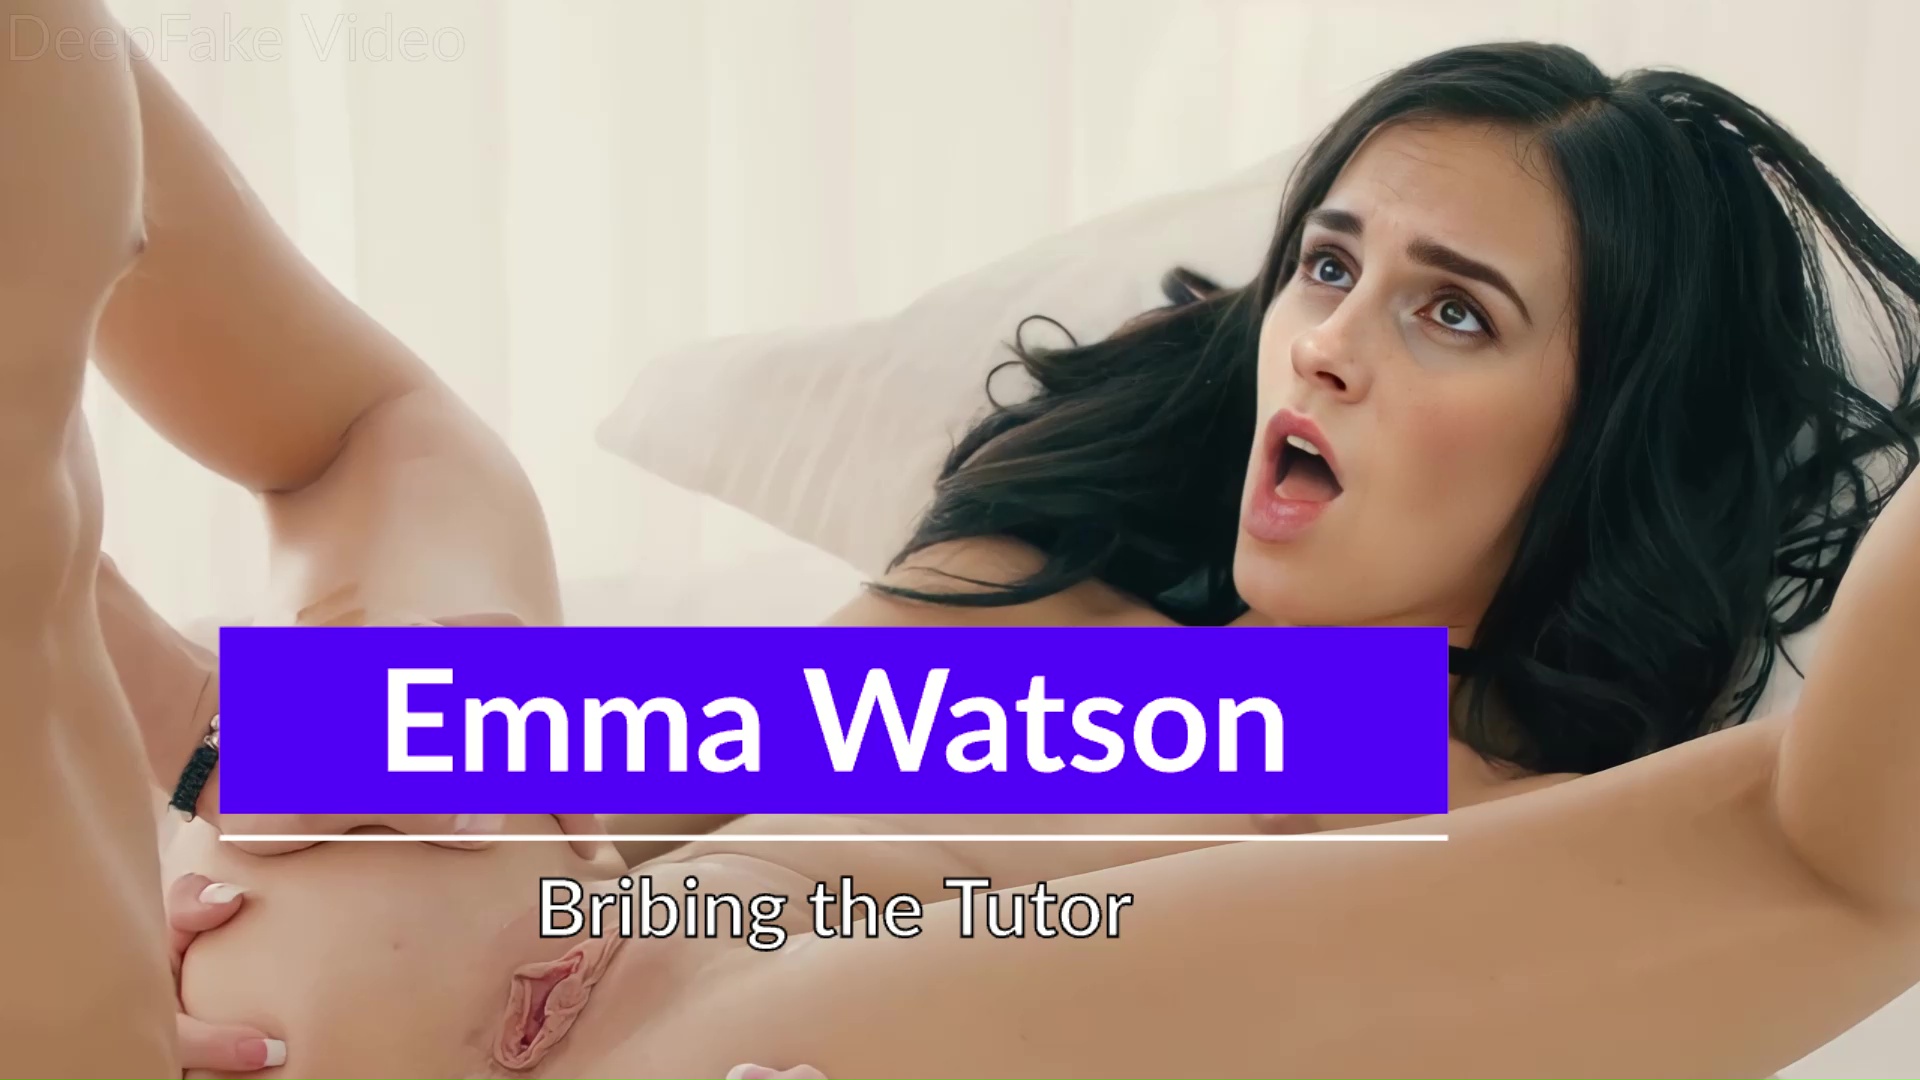 Emma Watson - Bribing the Tutor - Trailer (Paid Request)